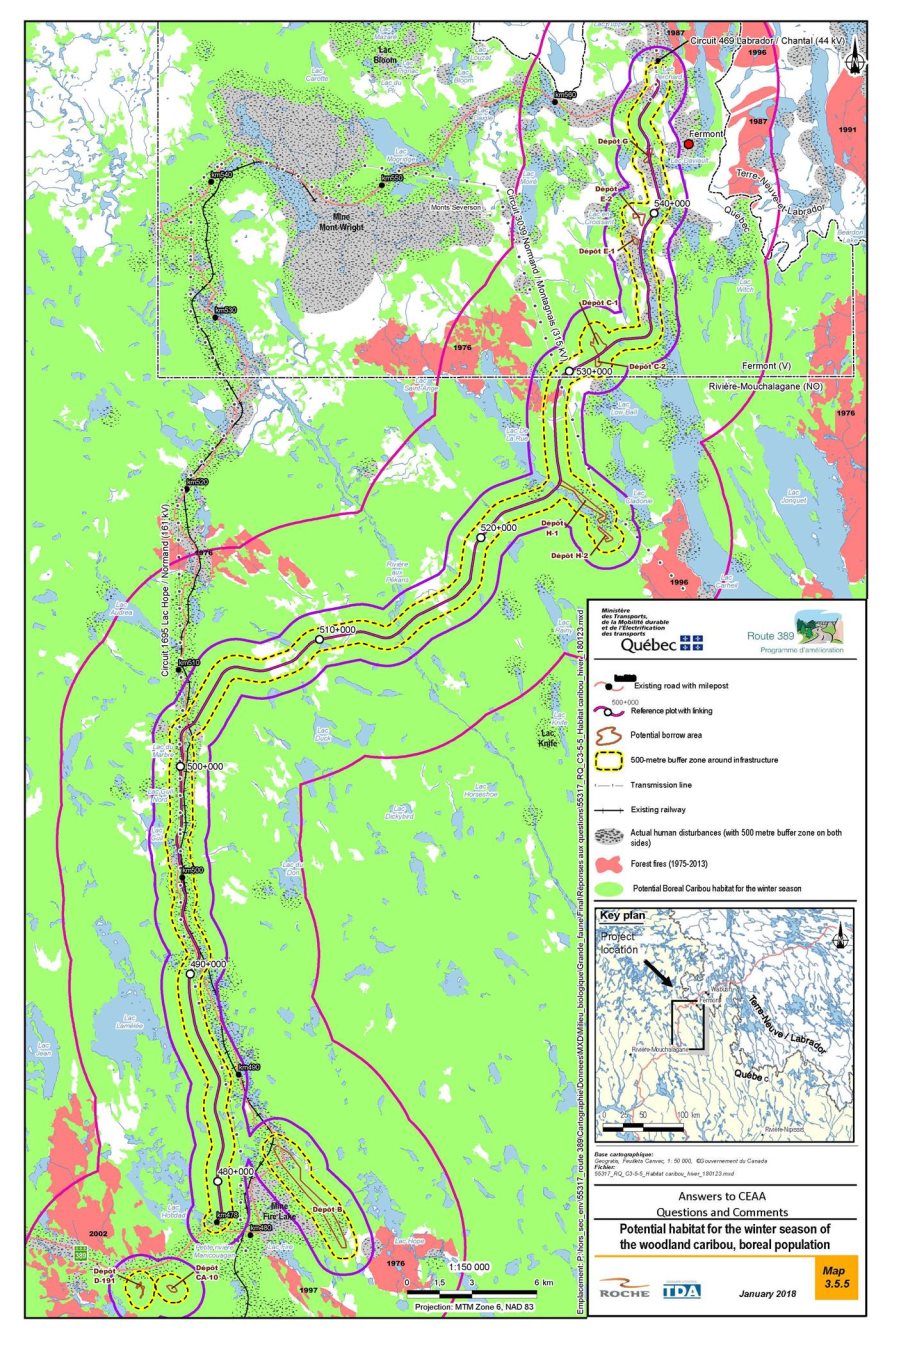 Figure 16: Potential Boreal Caribou habitat for wintering